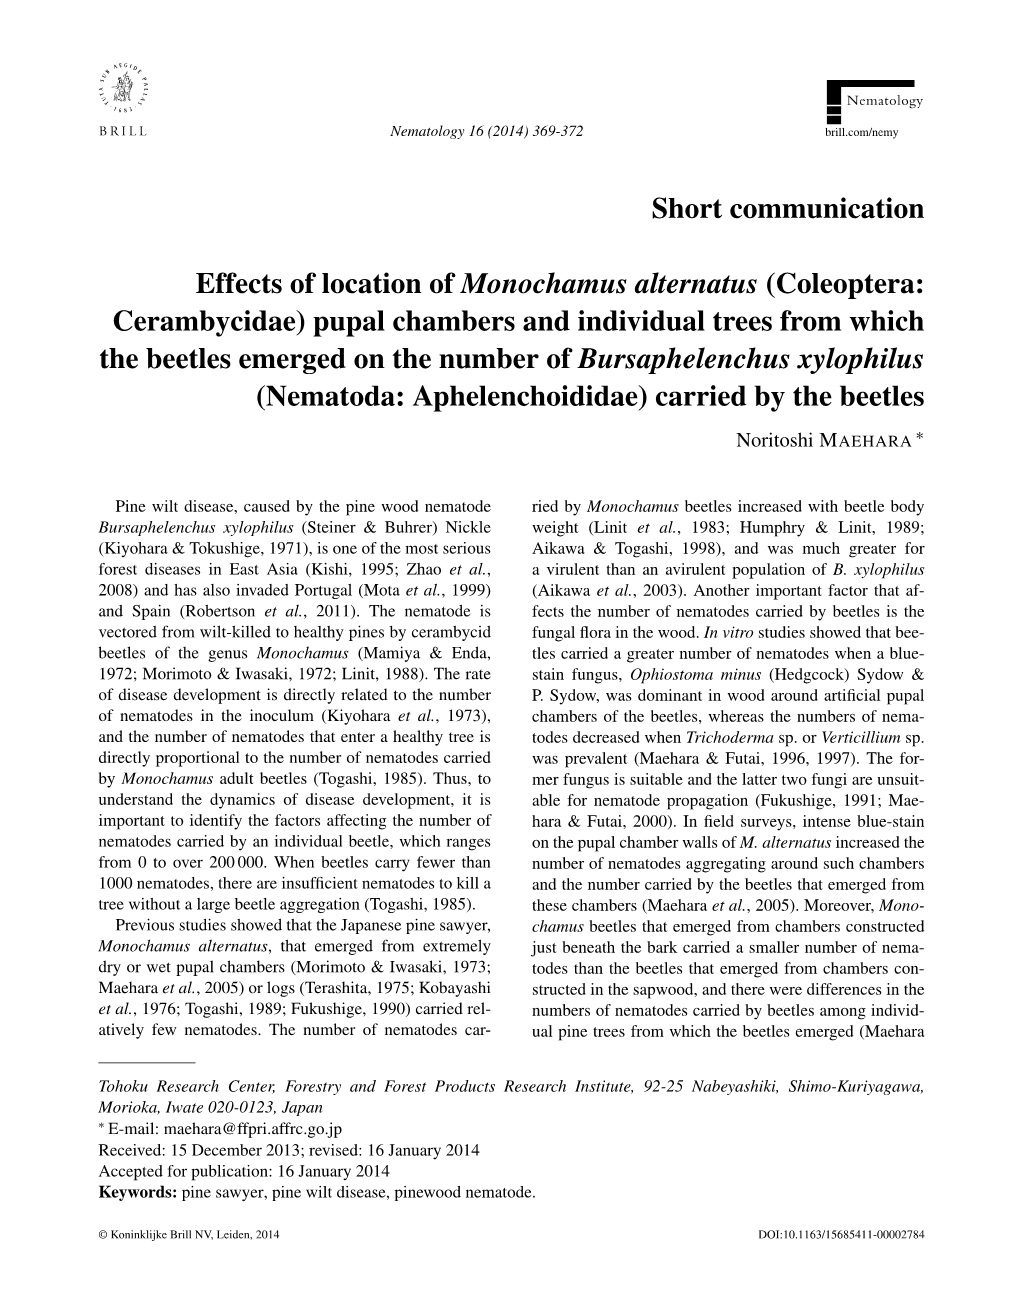 Short Communication Effects of Location of Monochamus Alternatus